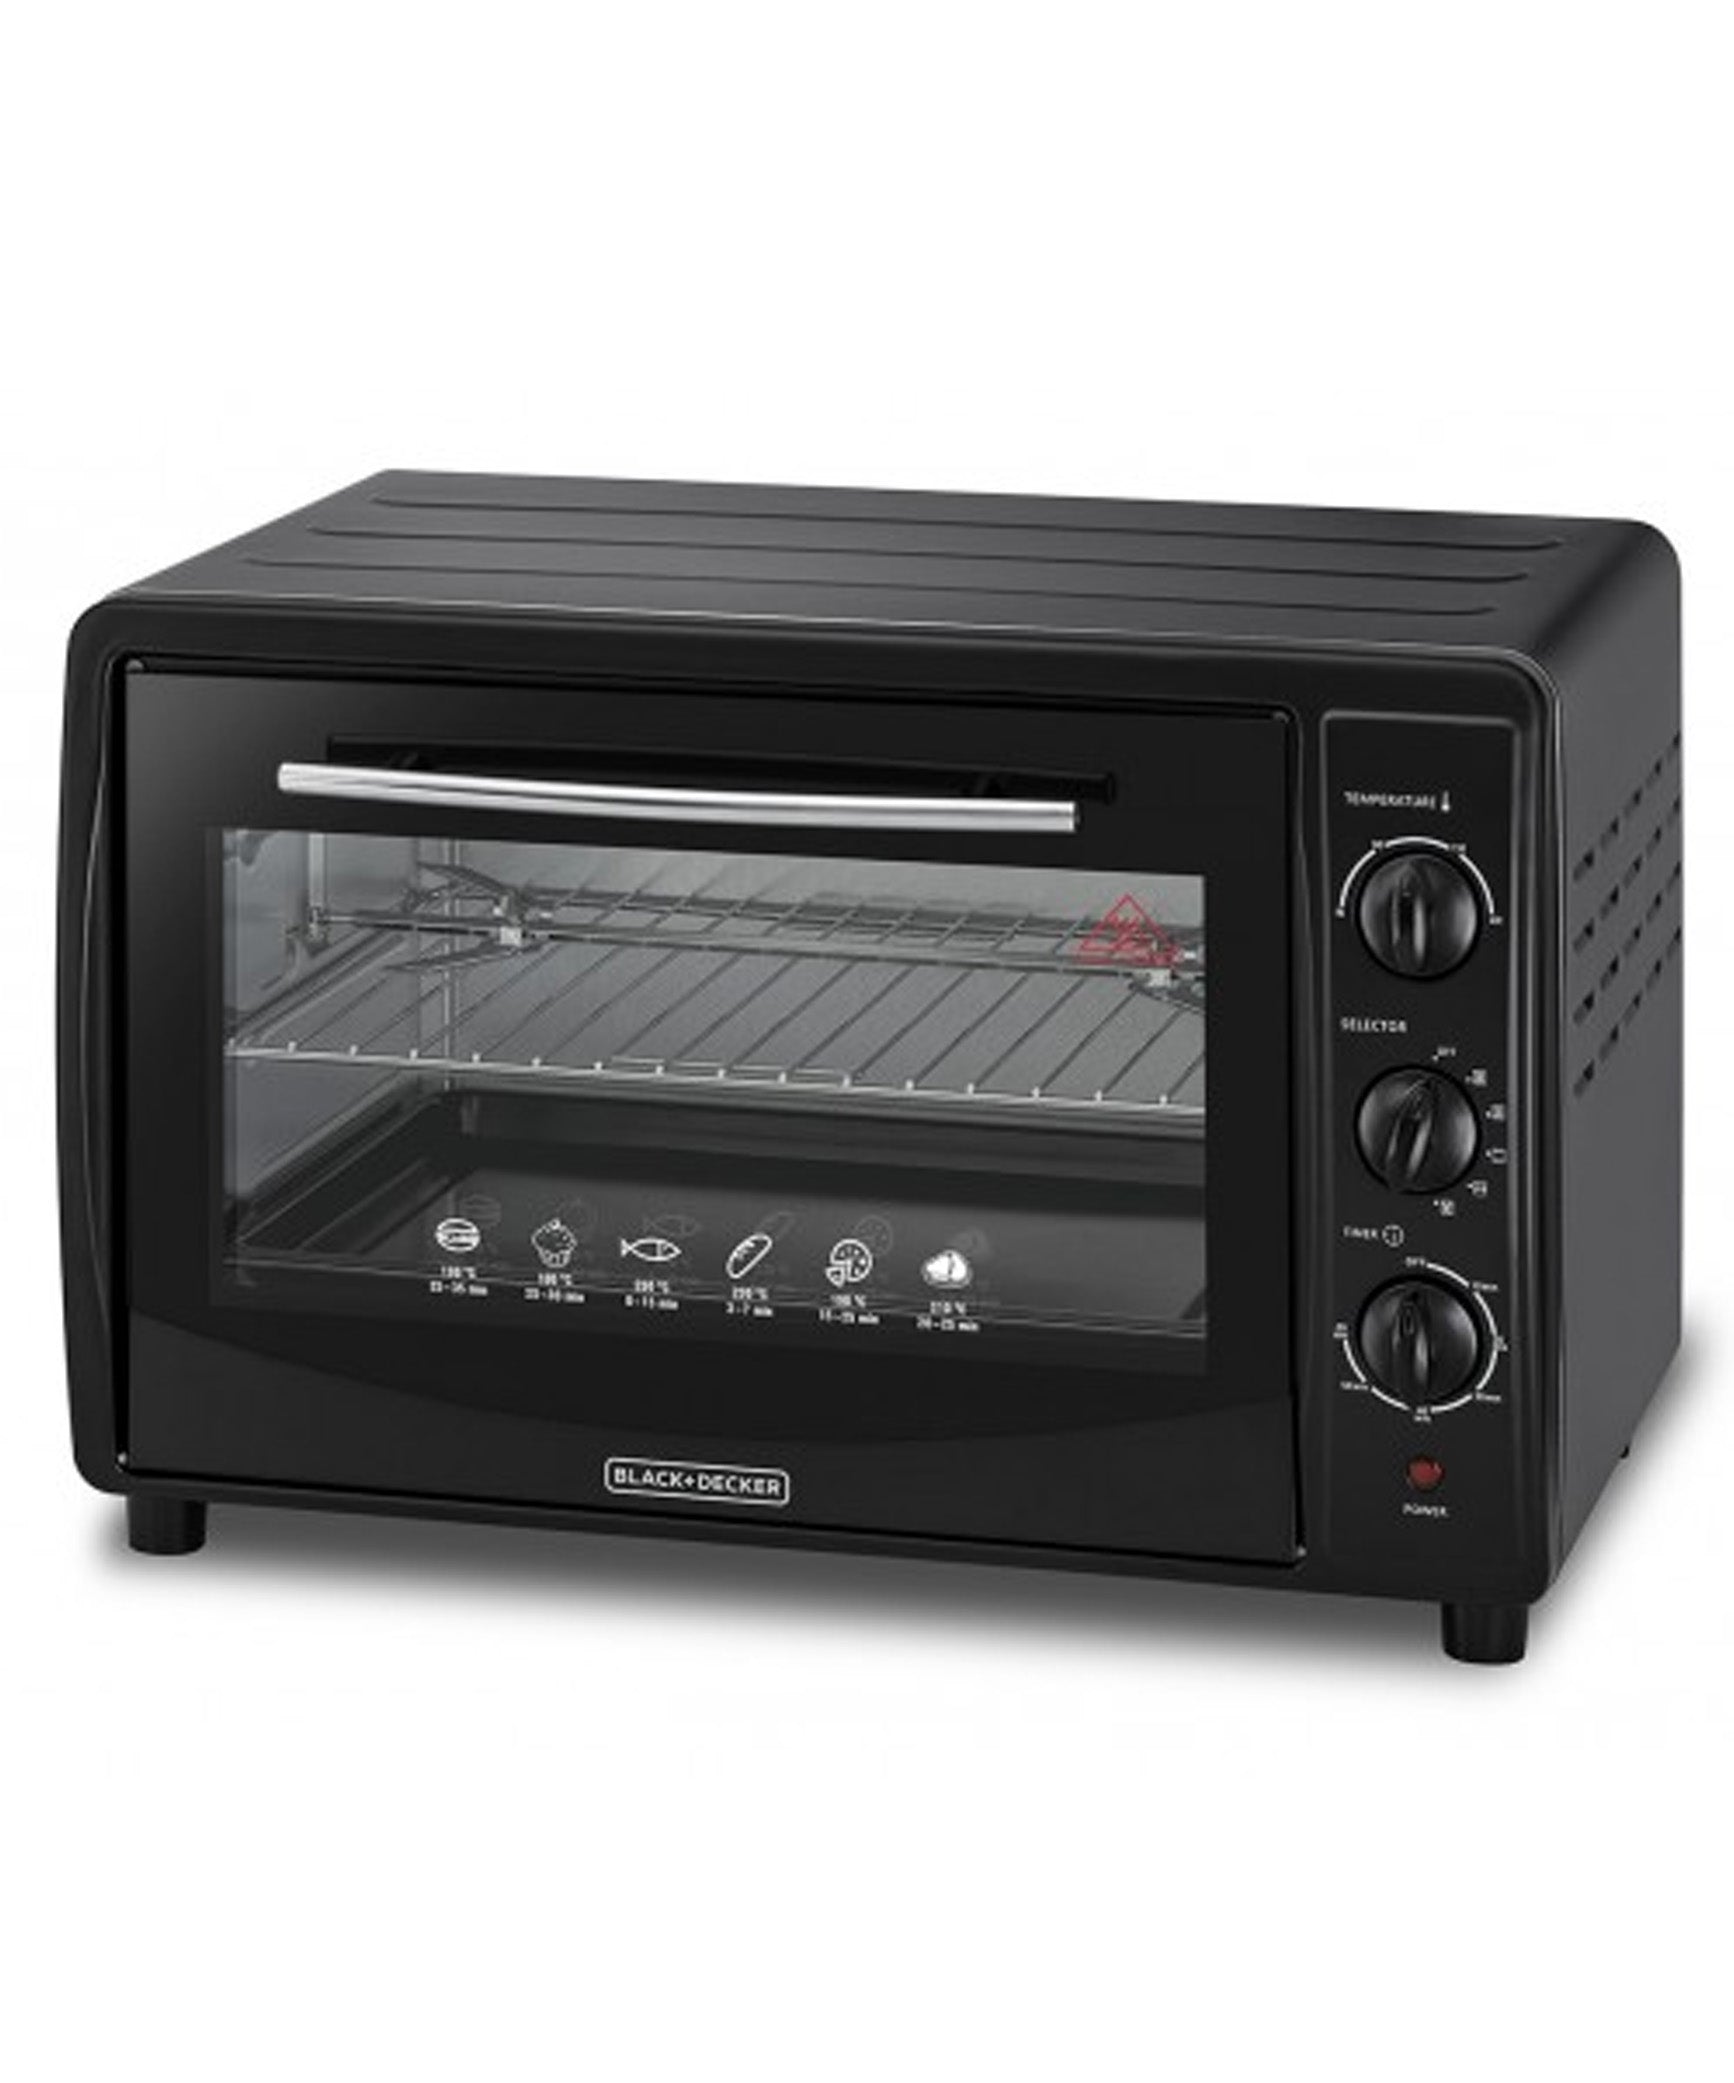 Black+Decker, 45 Litre Double Glass Multifunction Toaster Oven with Rotisserie,Black, TRO45RDG